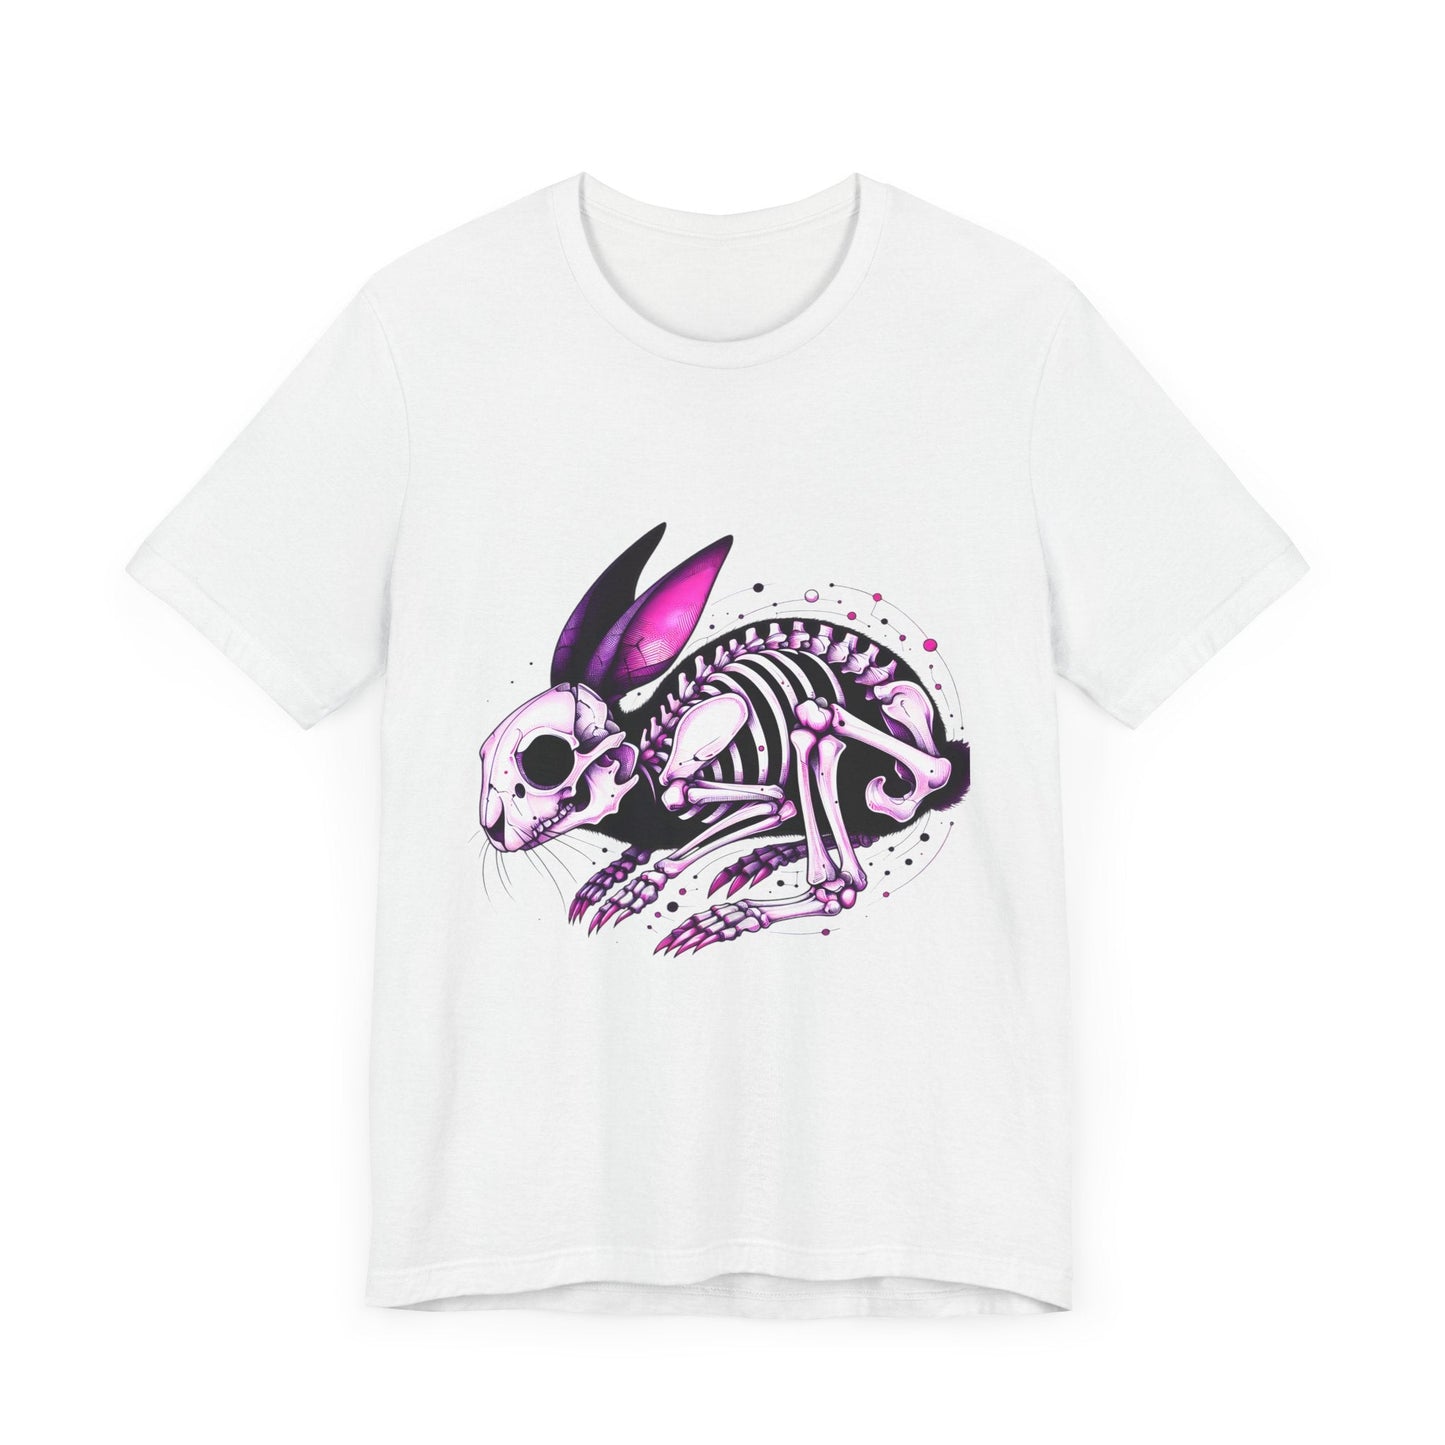 Skeleton Bunny Short Sleeve Tee ShirtT - ShirtVTZdesignsSolid White BlendXSCottonCrew neckDTG